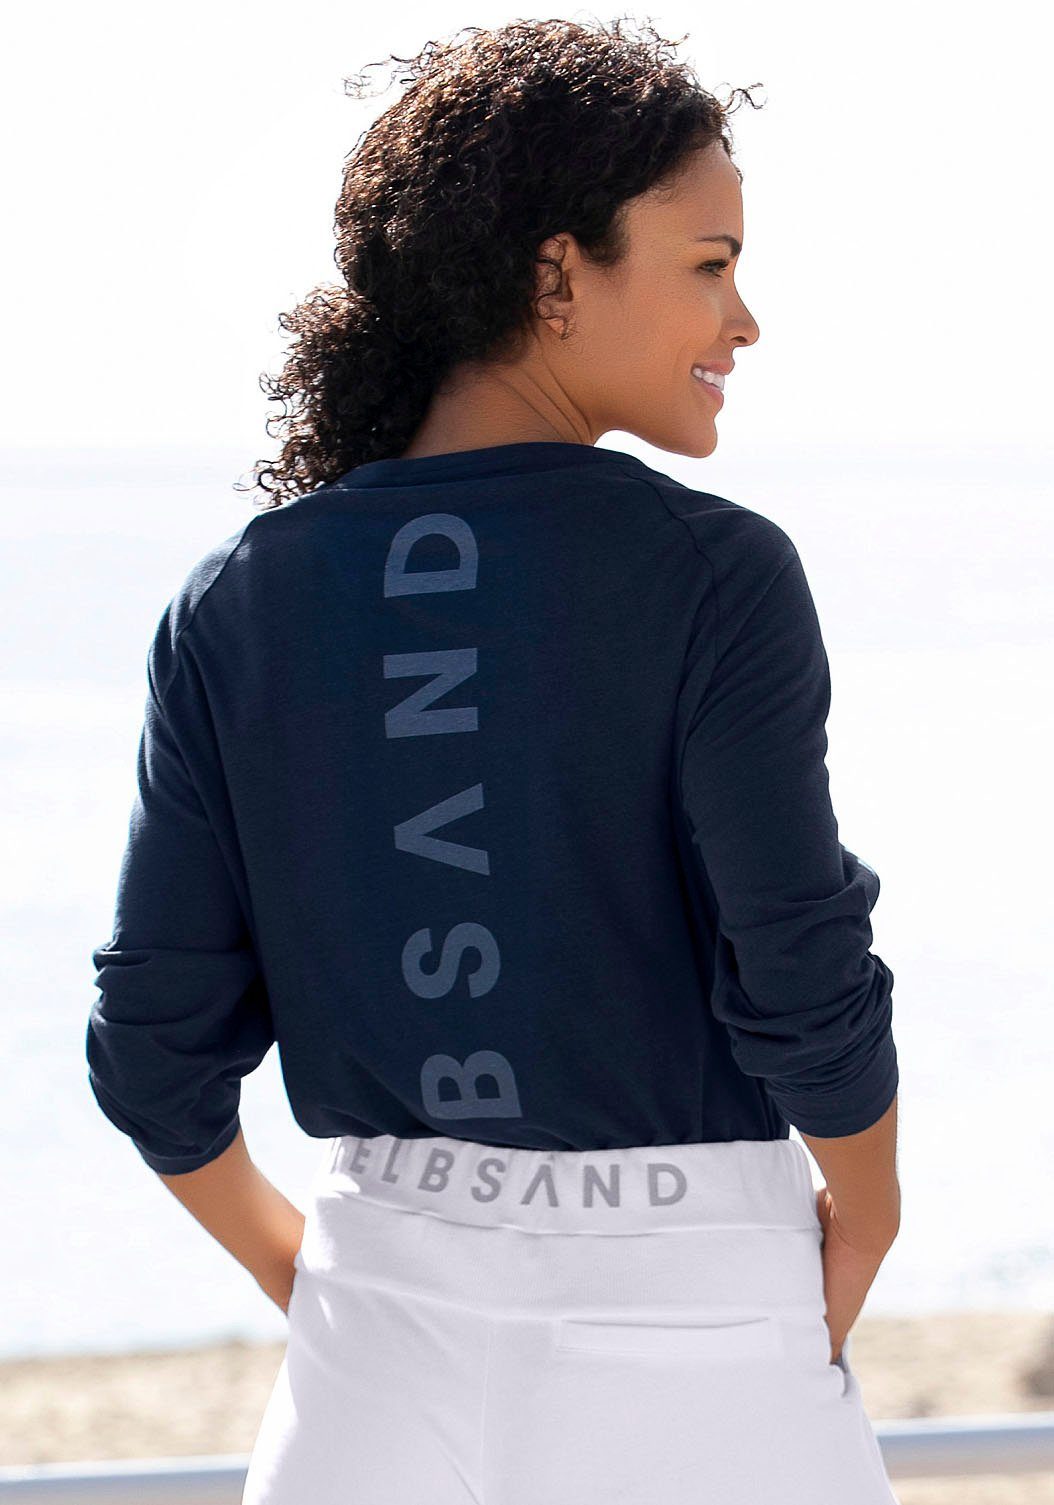 Langarmshirt sportlich-casual Logodruck Longsleeve hinten, Tinna Elbsand marine Baumwoll-Mix, aus mit